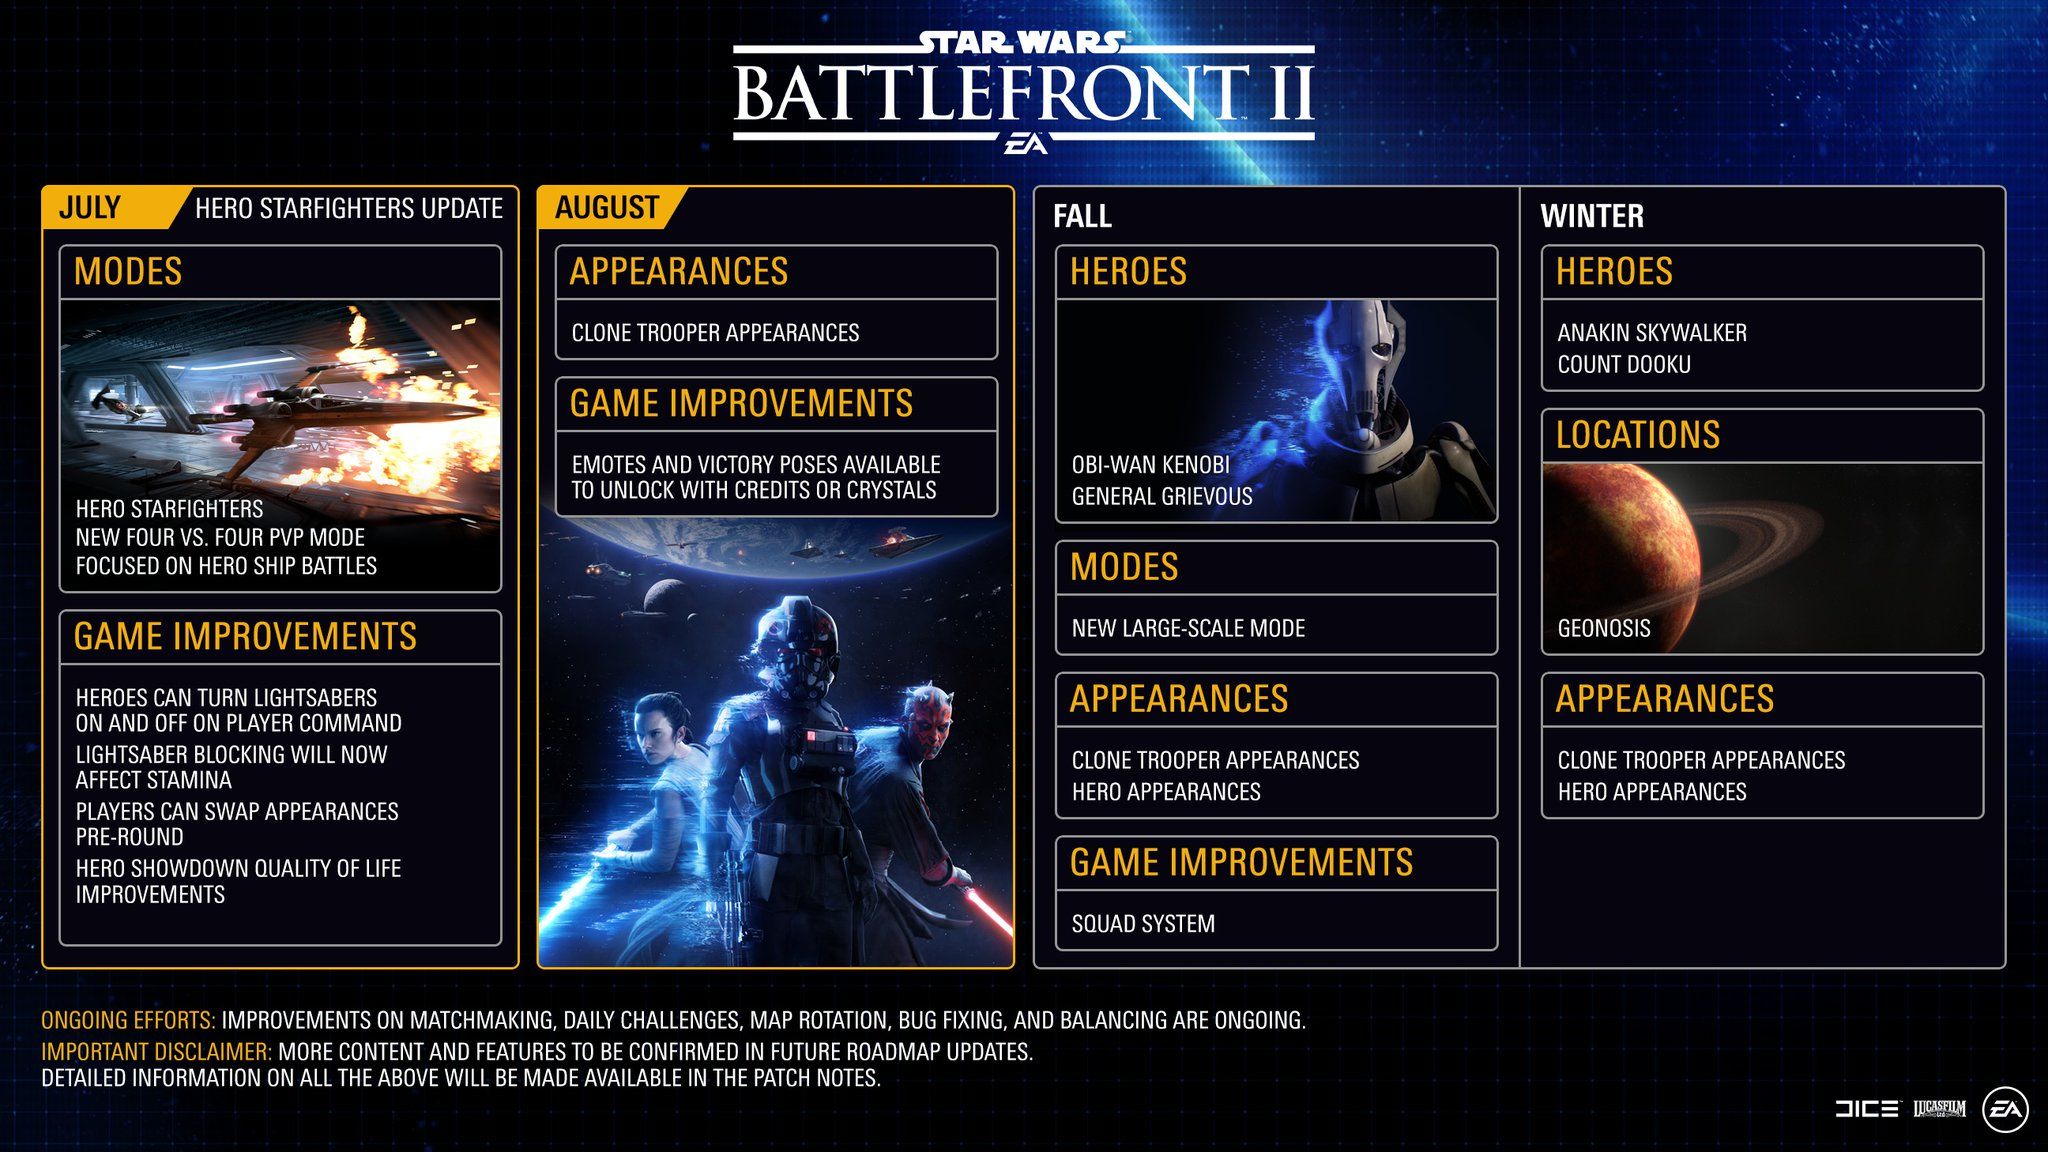 Battlefront 2 Content Chart